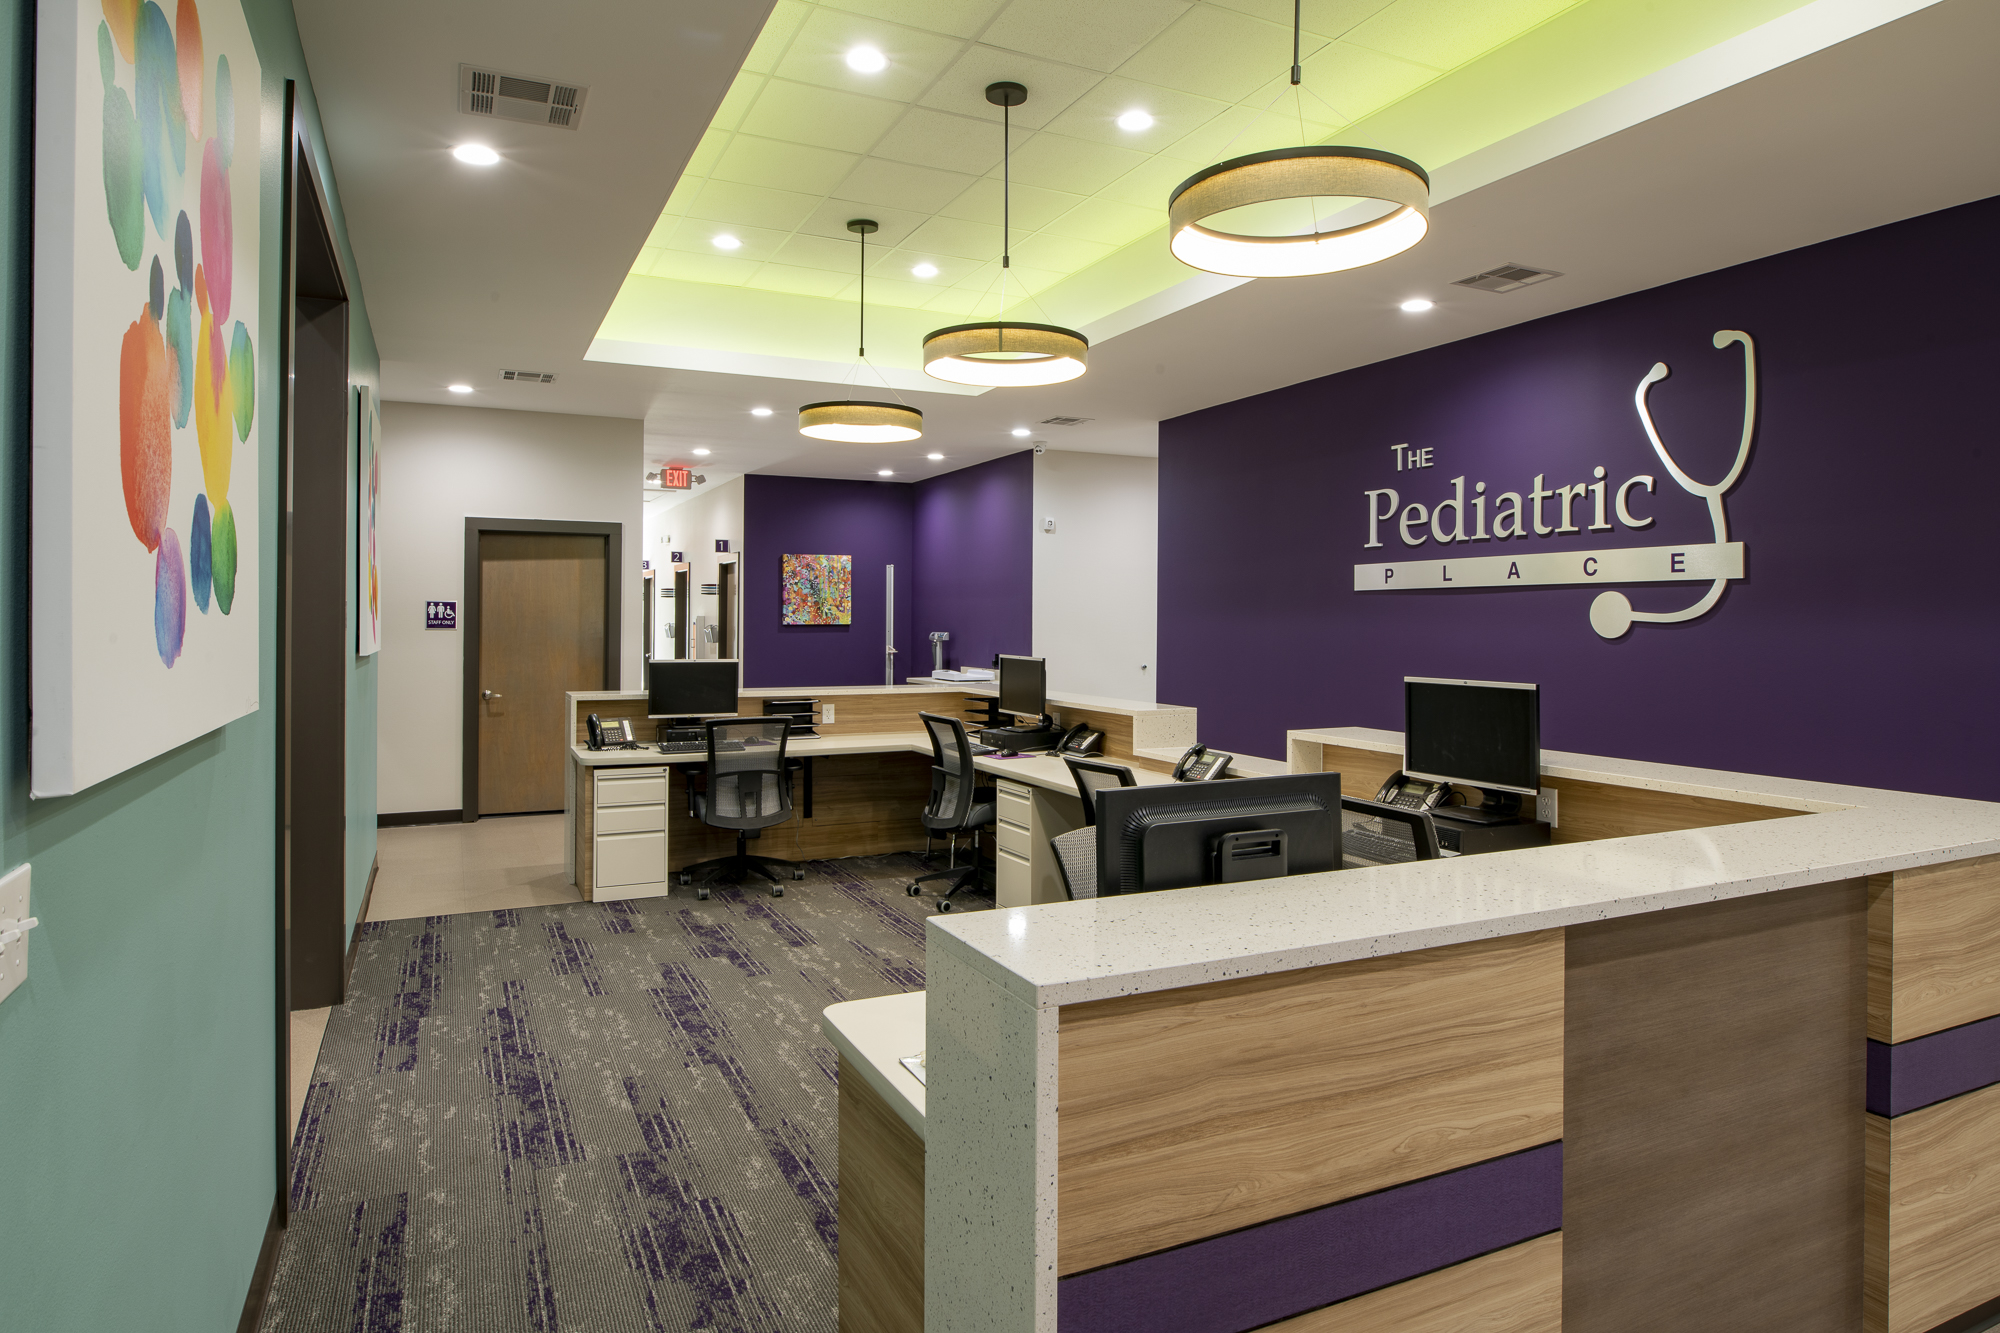 The Pediatric Place – Wayfinding